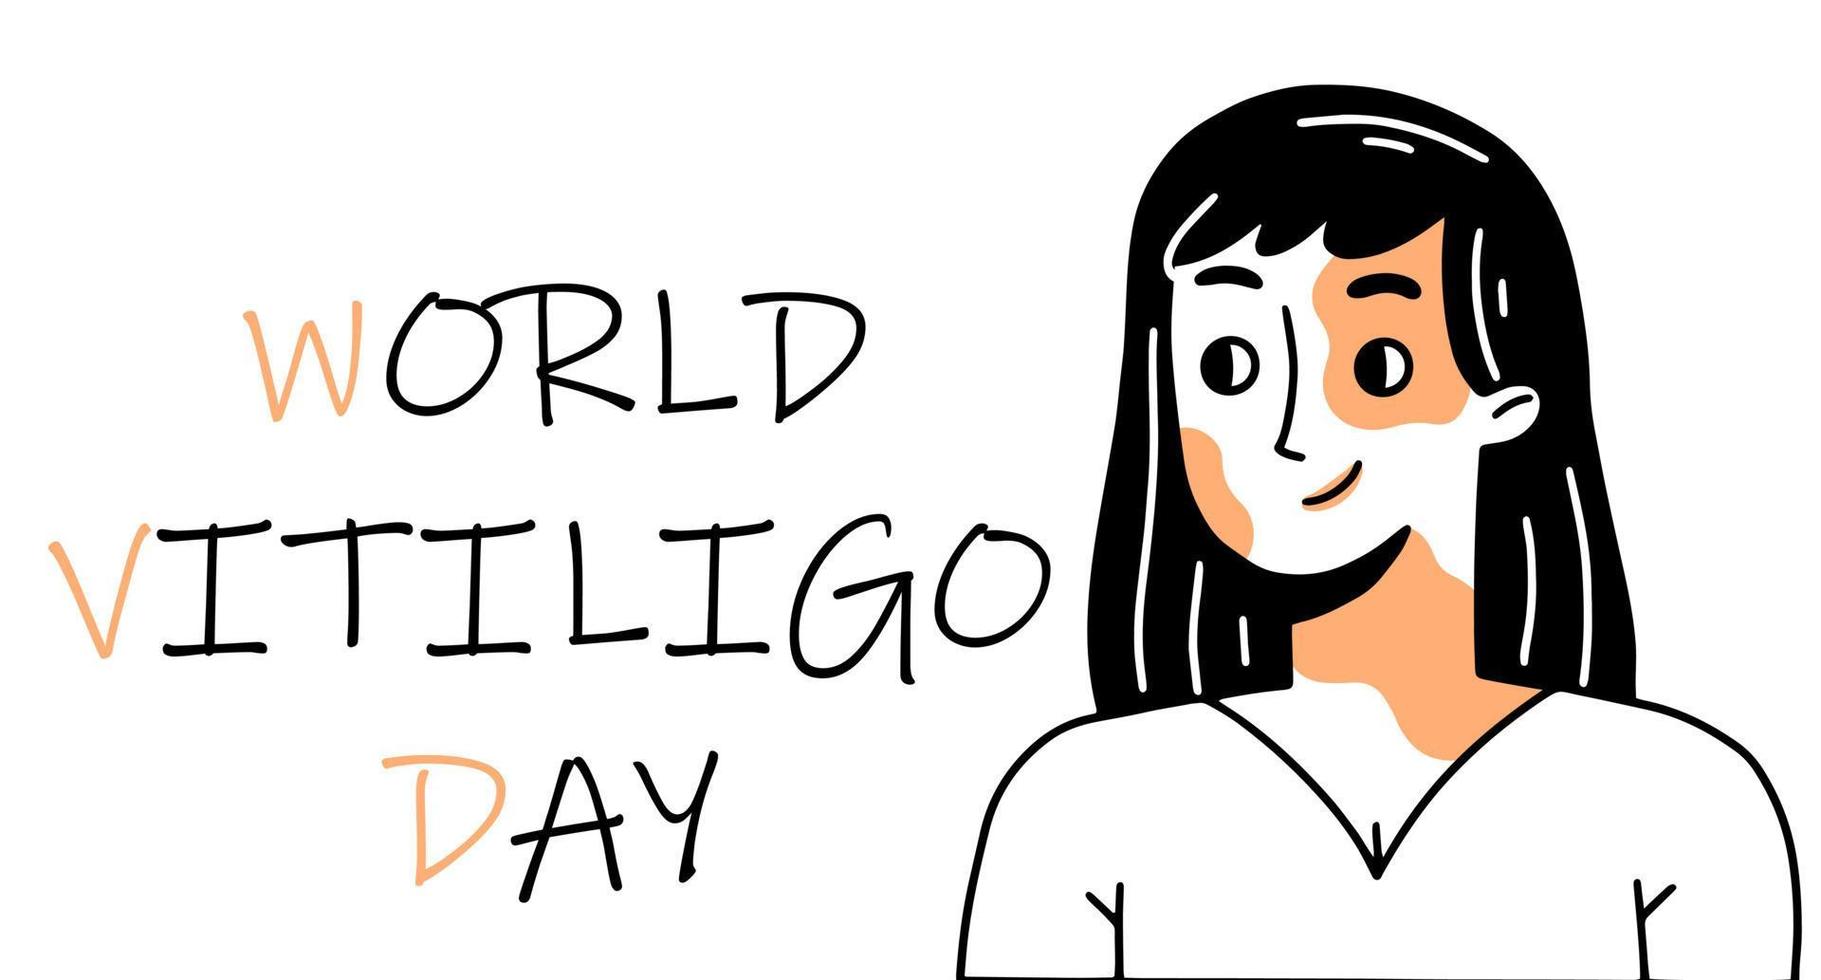 Welt-Vitiligo-Tag-Banner oder Poster mit glücklich lächelnder junger Frau. Charakter mit Vitiligo. Vektor-Illustration. vektor